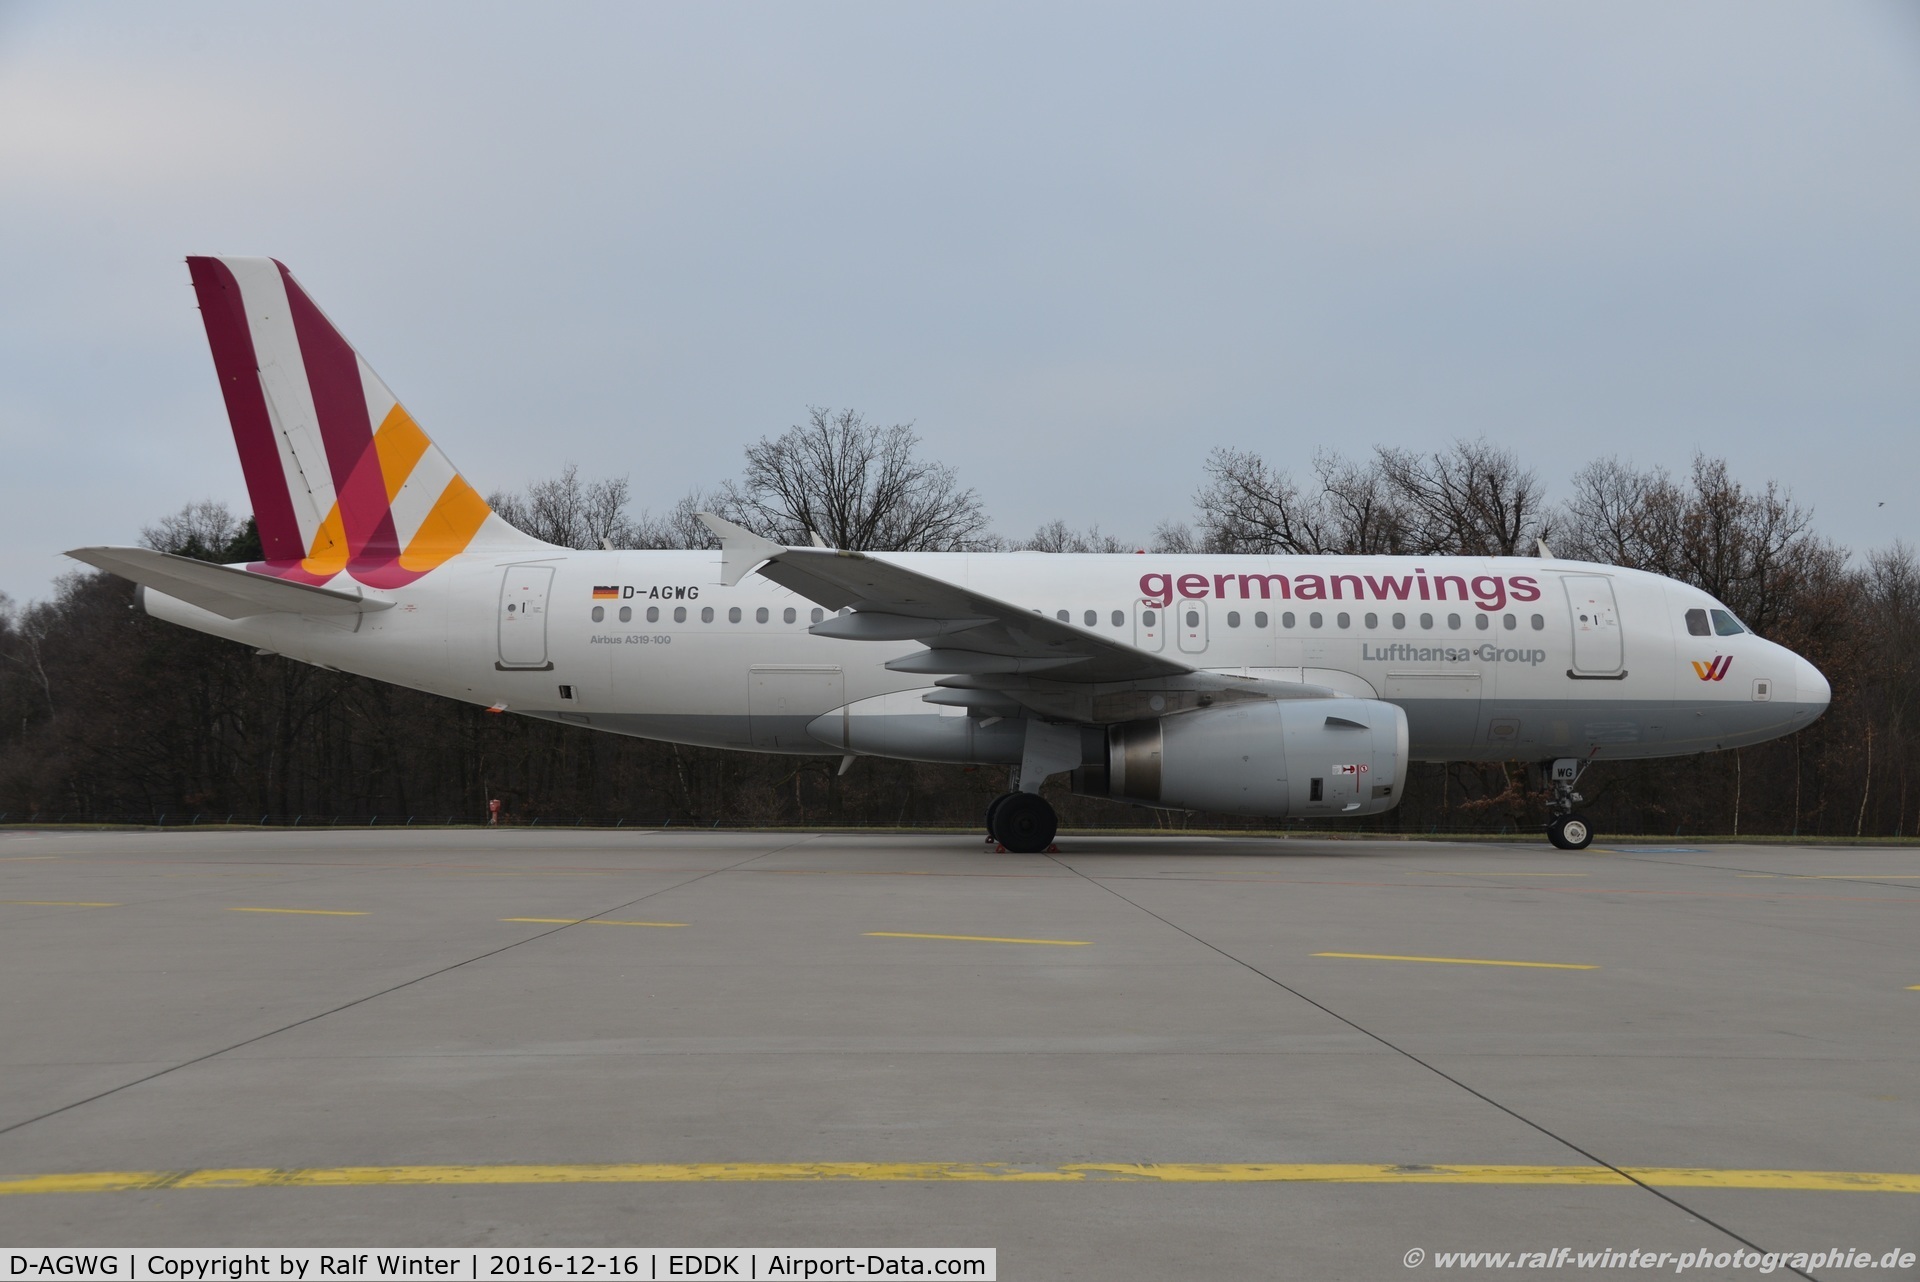 D-AGWG, 2007 Airbus A319-132 C/N 3193, Airbus A319-132 - 4U GWI Germanwings - 3193 - D-AGWG - 16.12.2016 - CGN